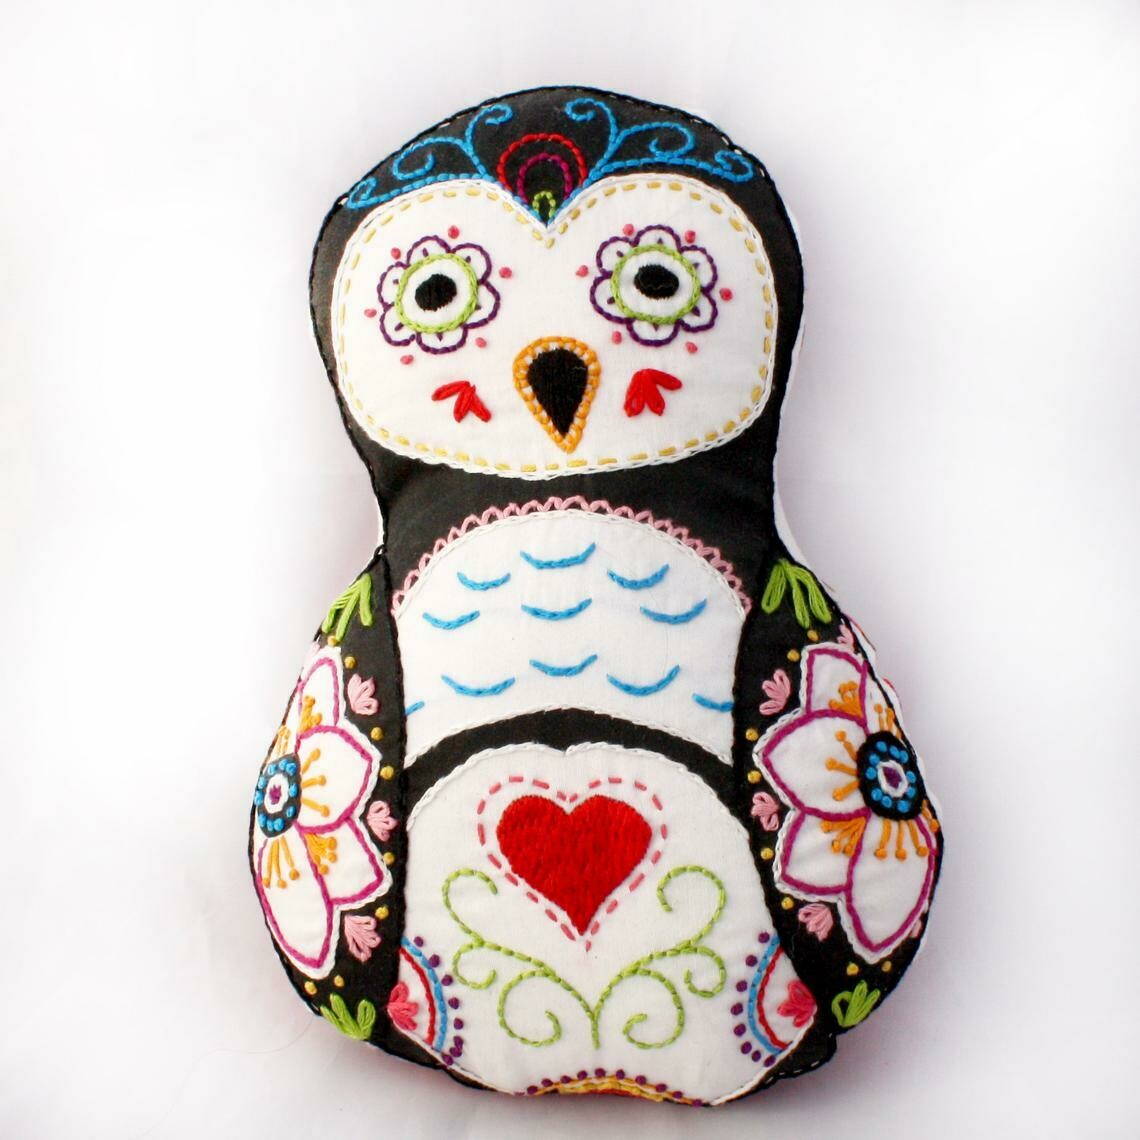 SALE - Crafty Creatures Embroidery Kit - Sugar Skull Owl